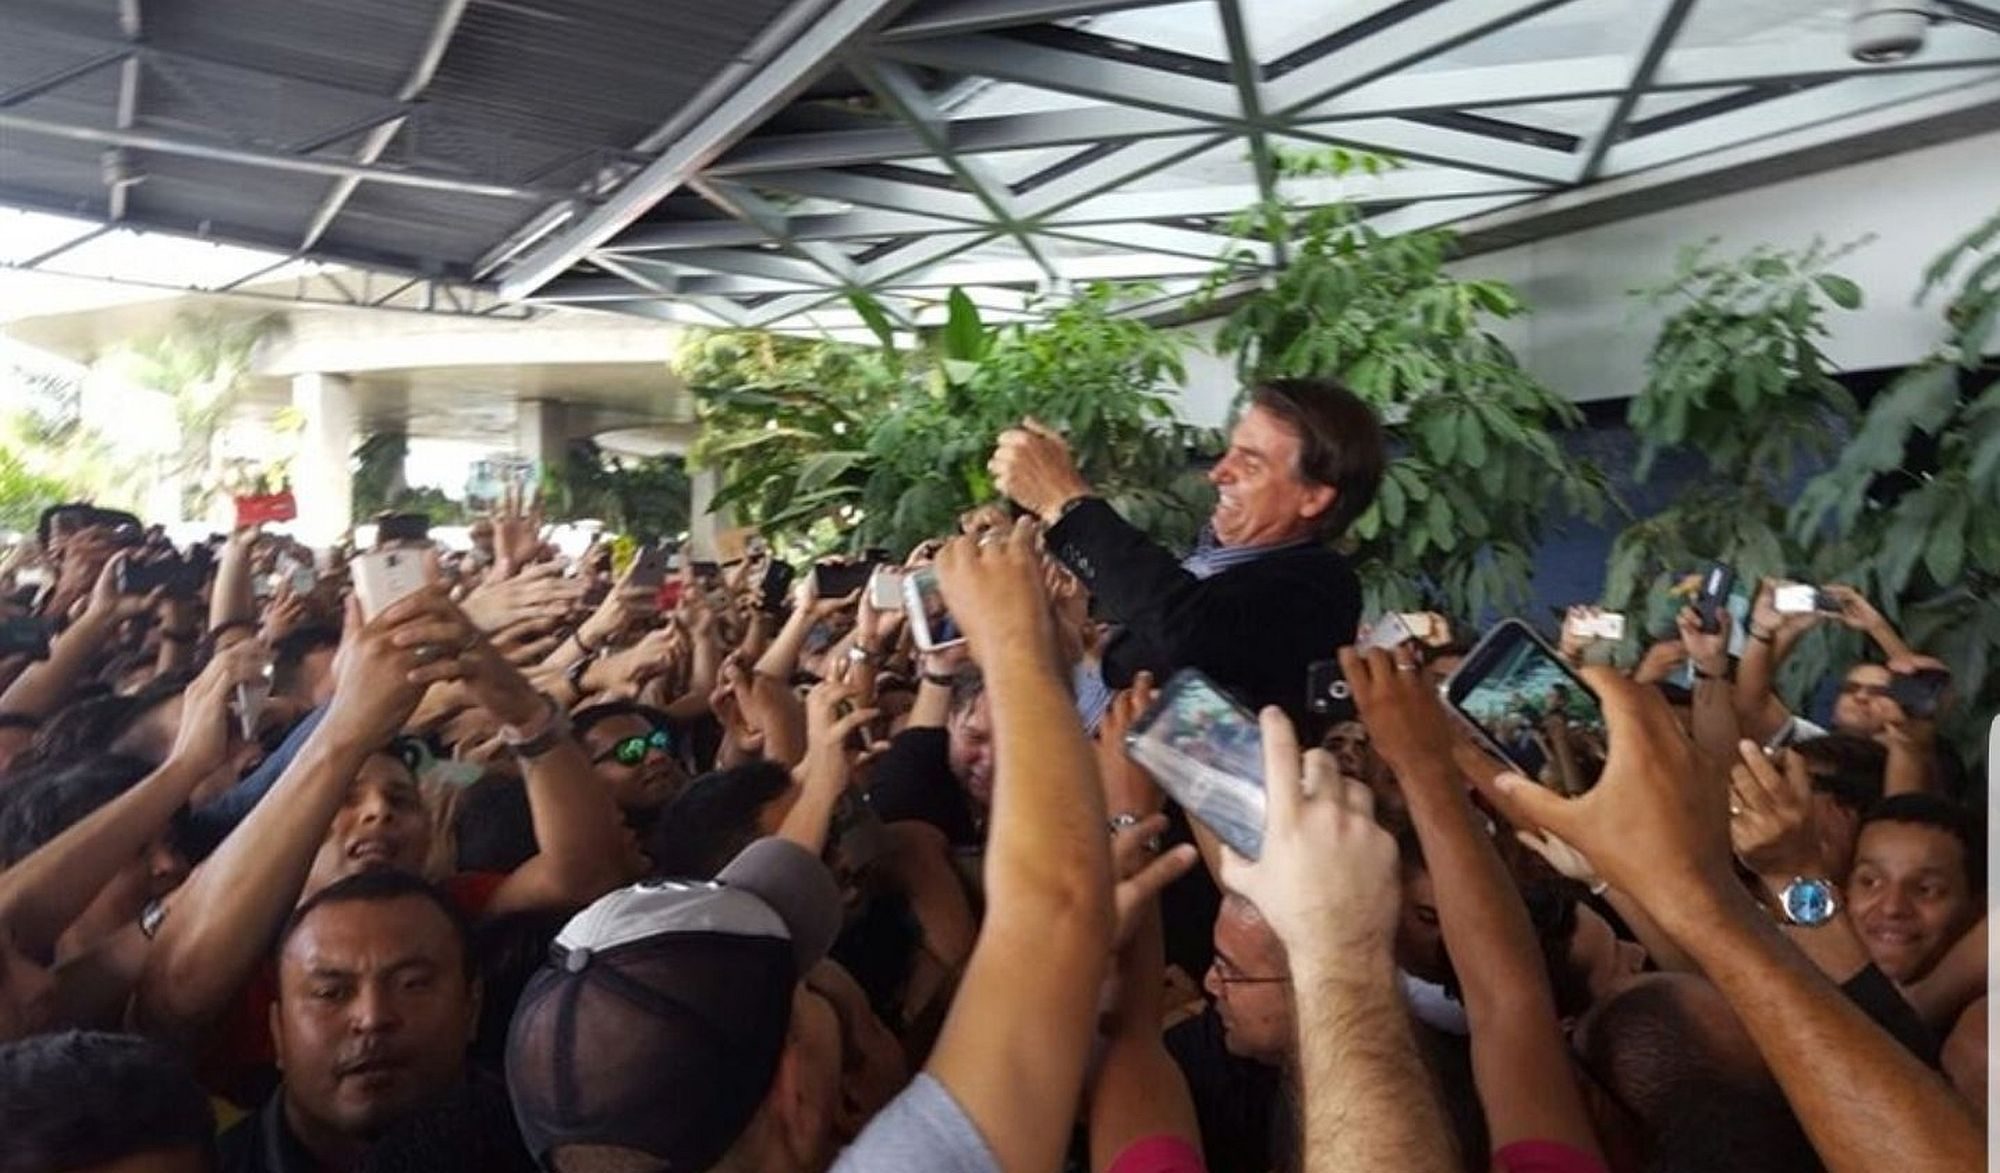 House representative Jair Bolsonaro being carried by fans